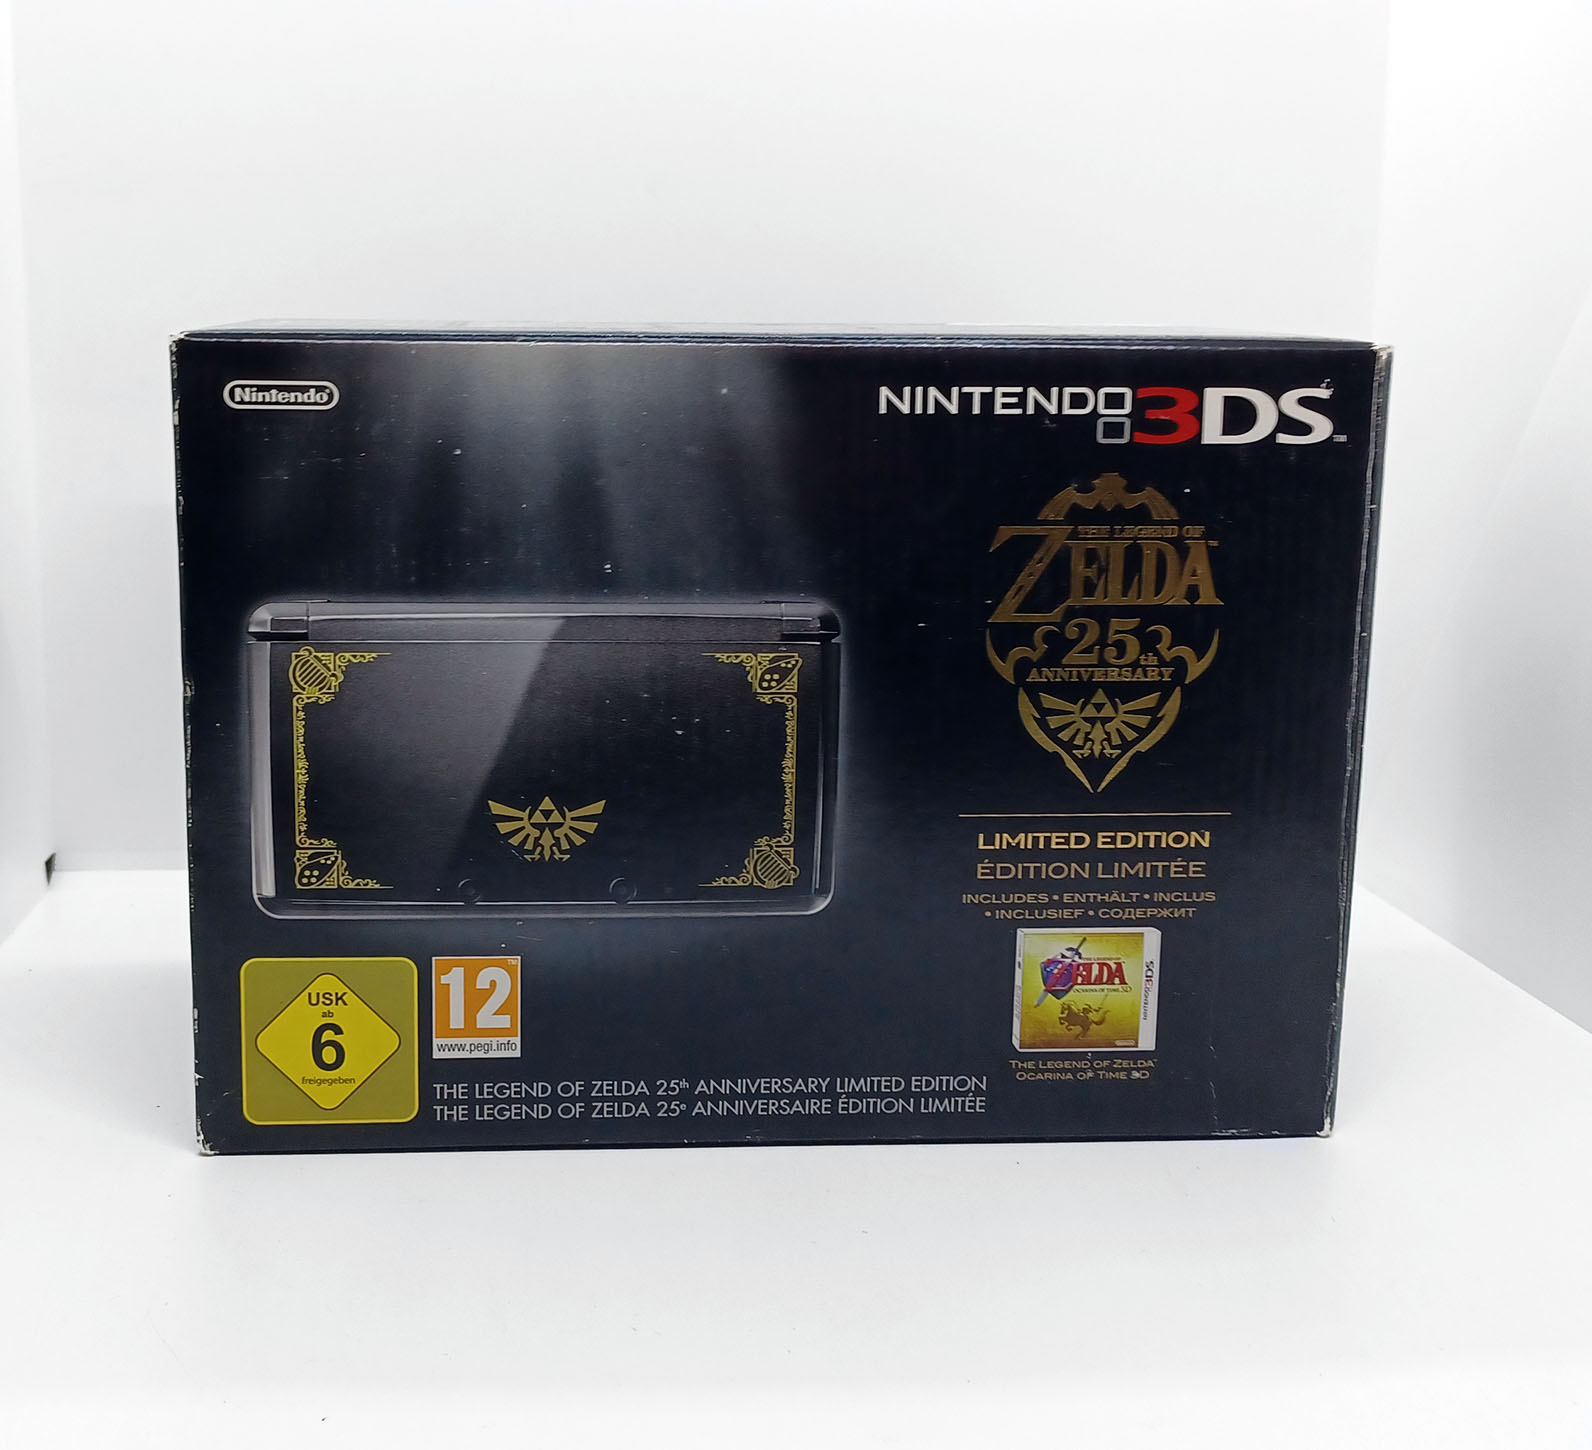 Nintendo 3DS Edition limitée The legend of Zelda 25th anniversary